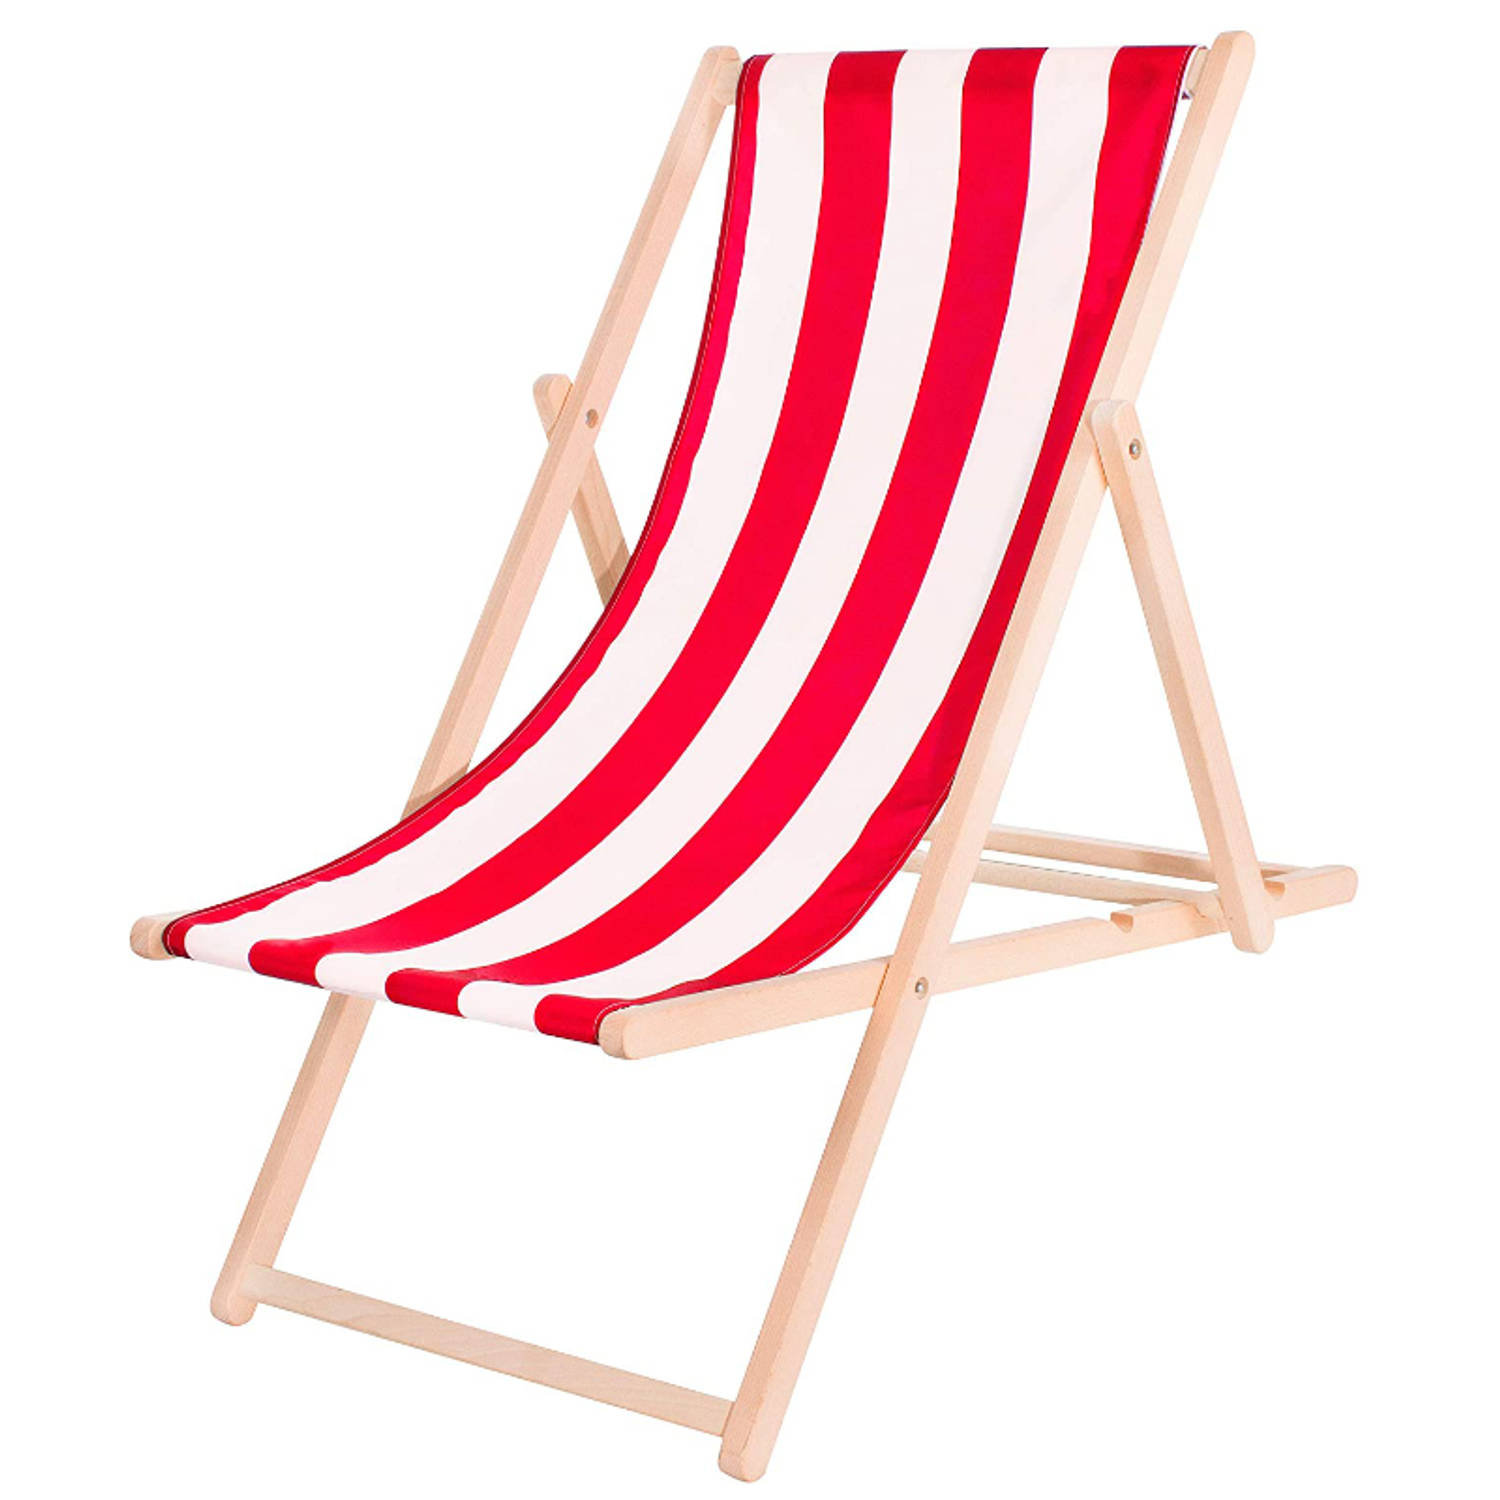 Ligbed Strandstoel Ligstoel Verstelbaar Beukenhout Handgemaakt Rood Wit